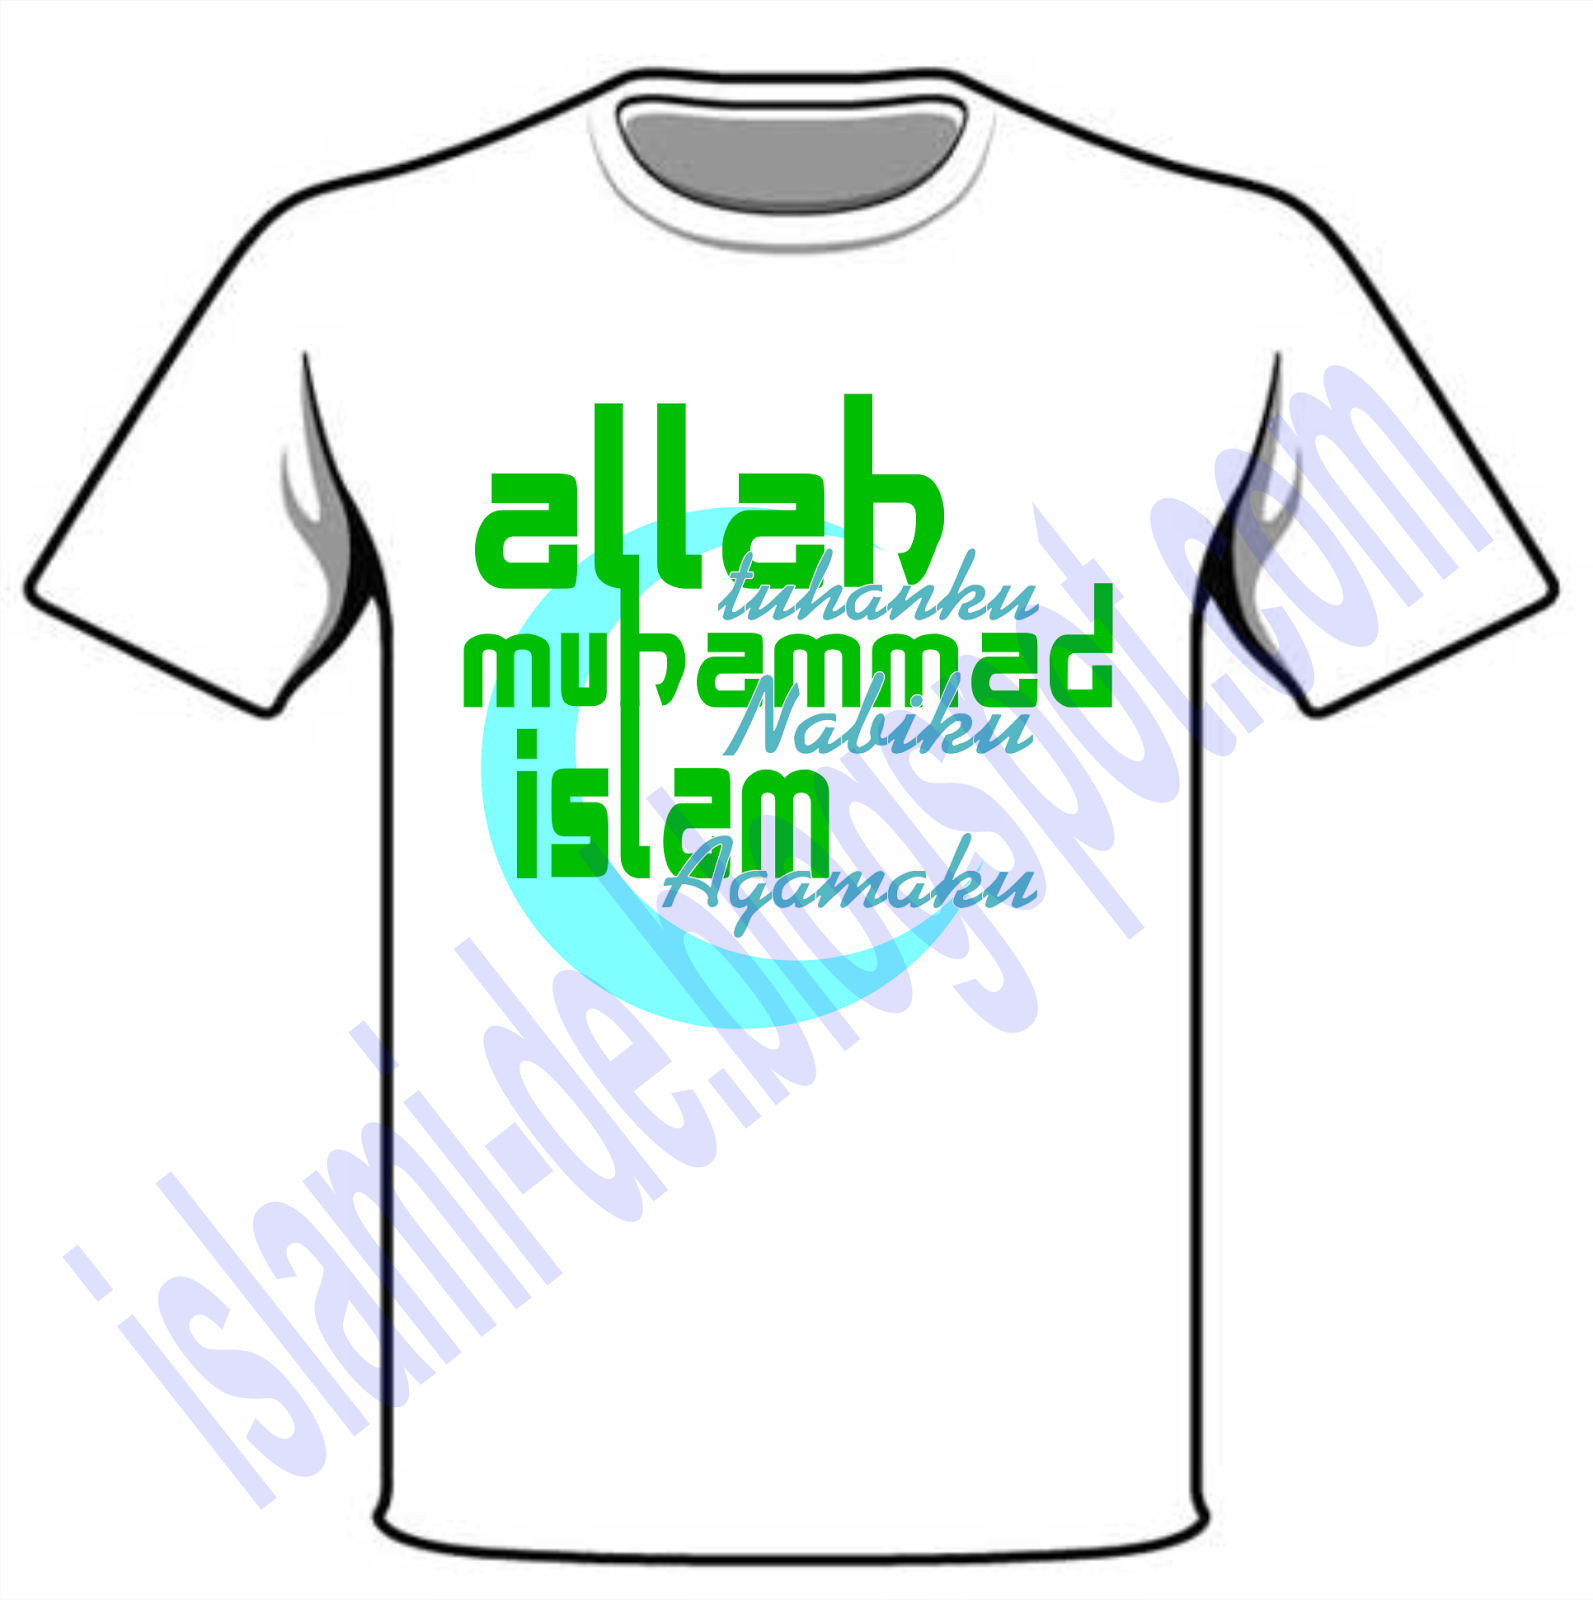  Desain  Kaos  Terbaru Islami Keren  islamiDe